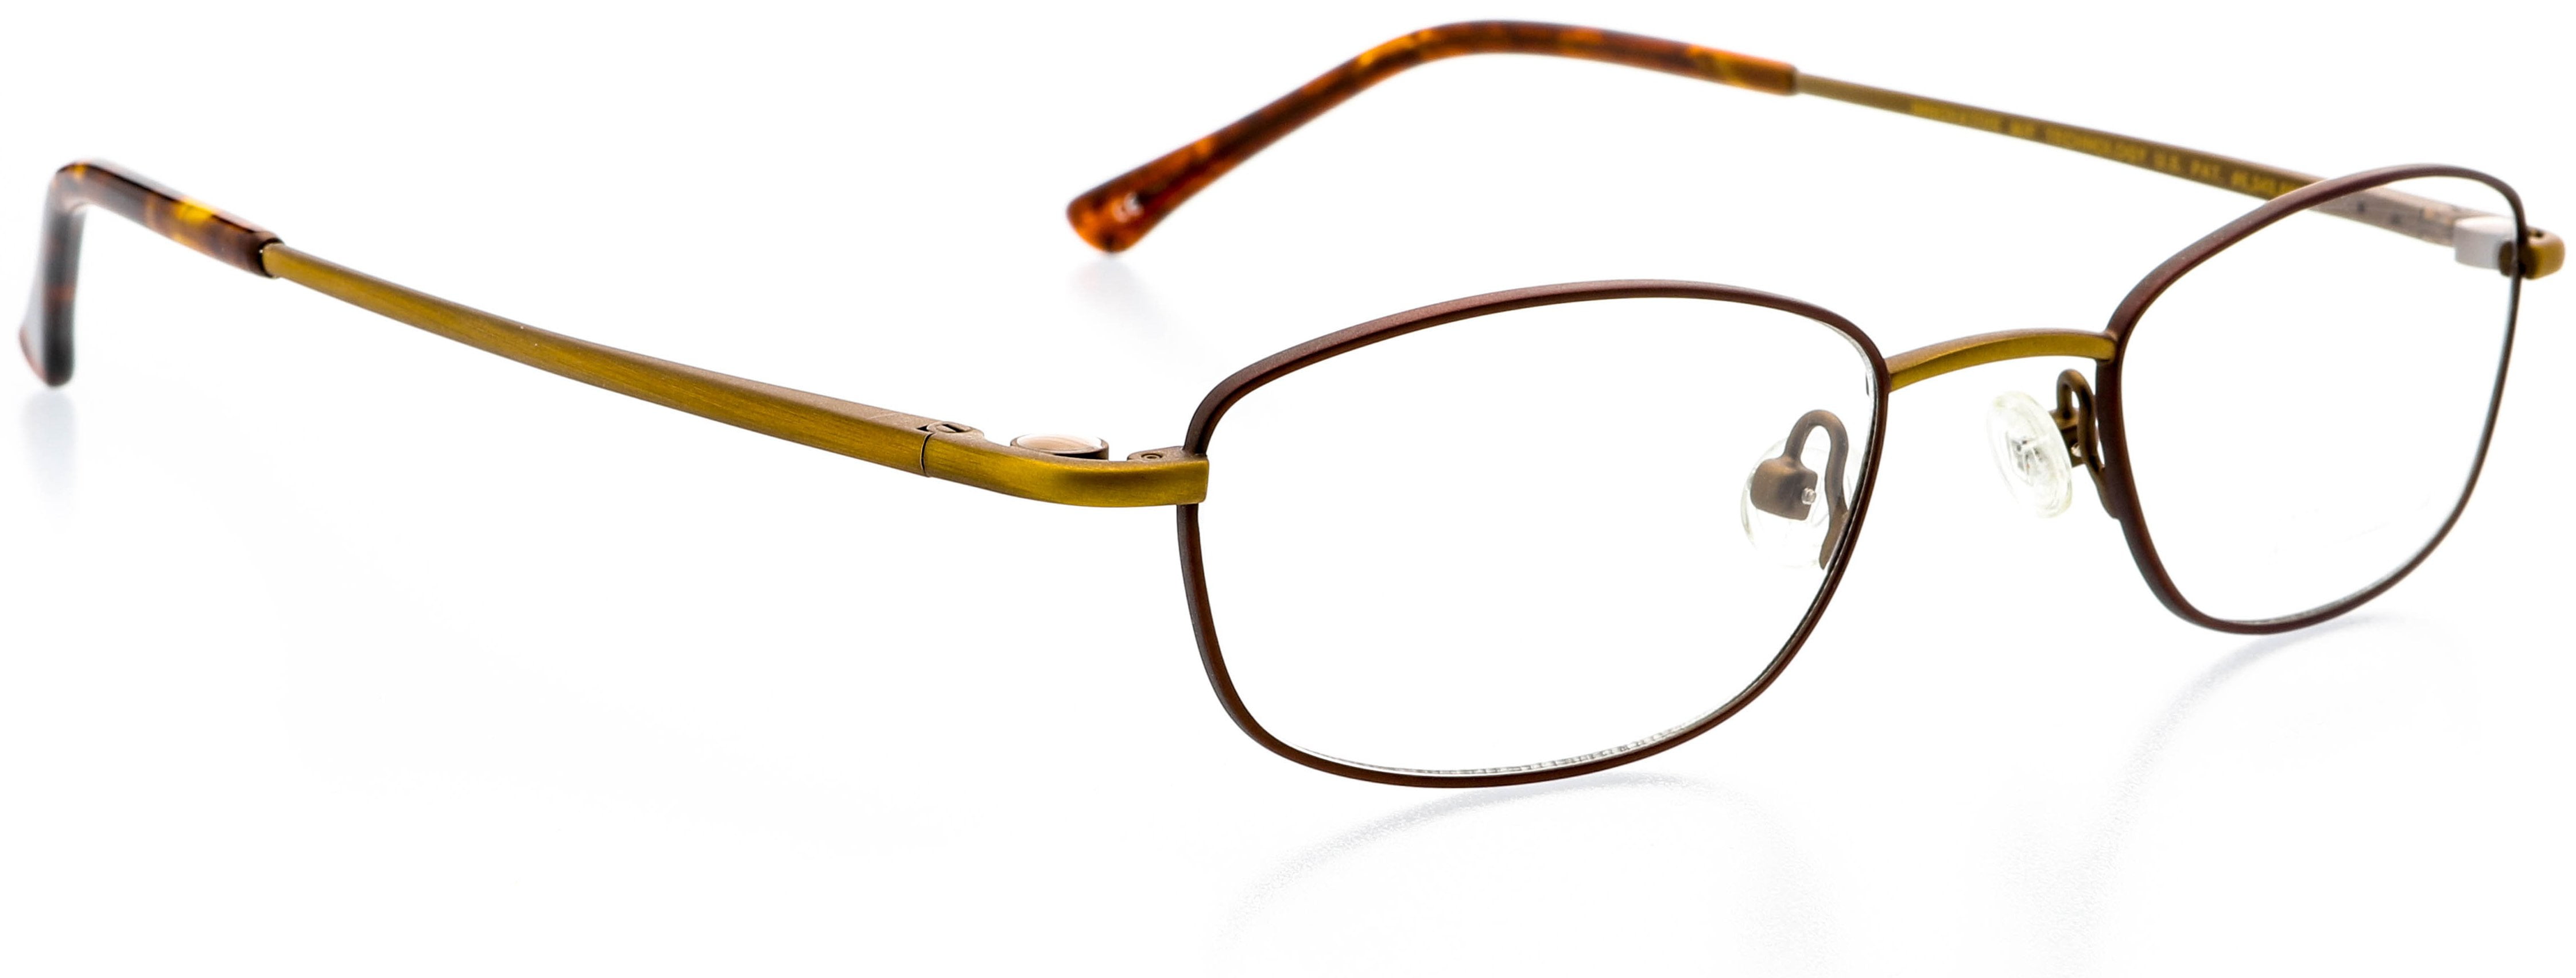 Barton Perreira Hillix Eyeglasses Frames 48-20-140 Antique Gold Women Titanium